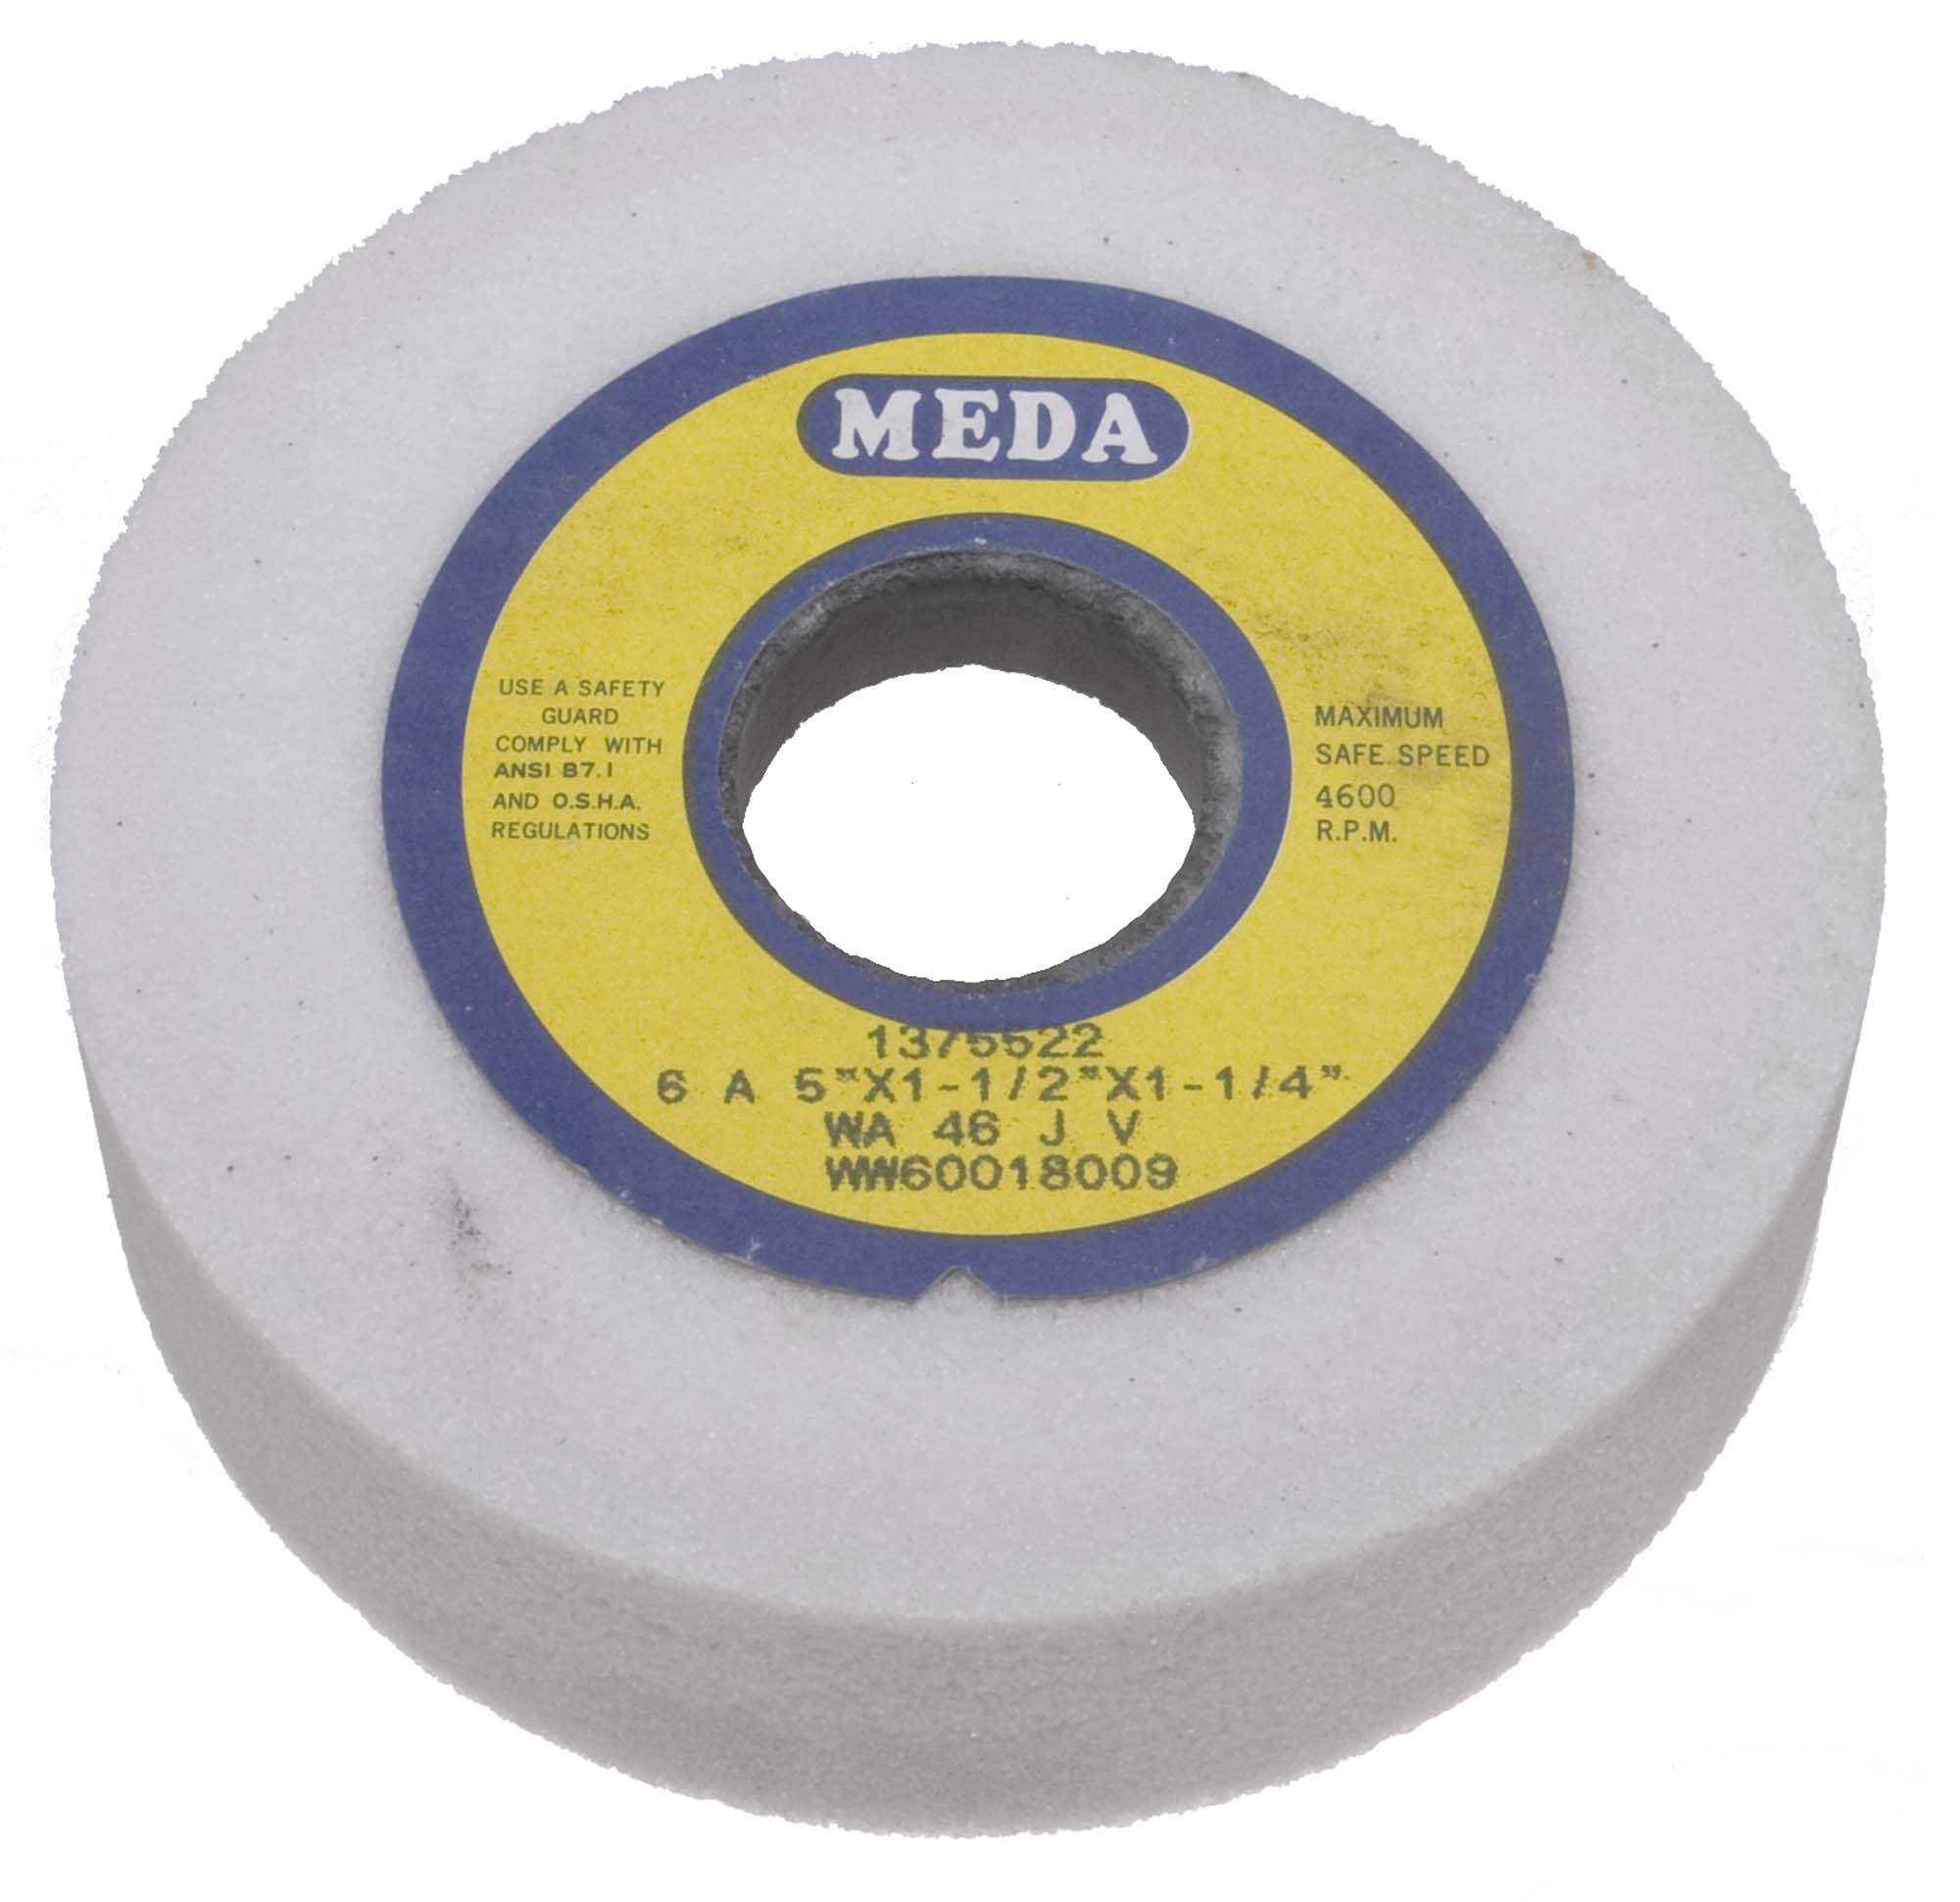 Meda 5 x 1-1/2 x 1-1/4 80K Straight Cup White Aluminum Oxide Grinding Wheel